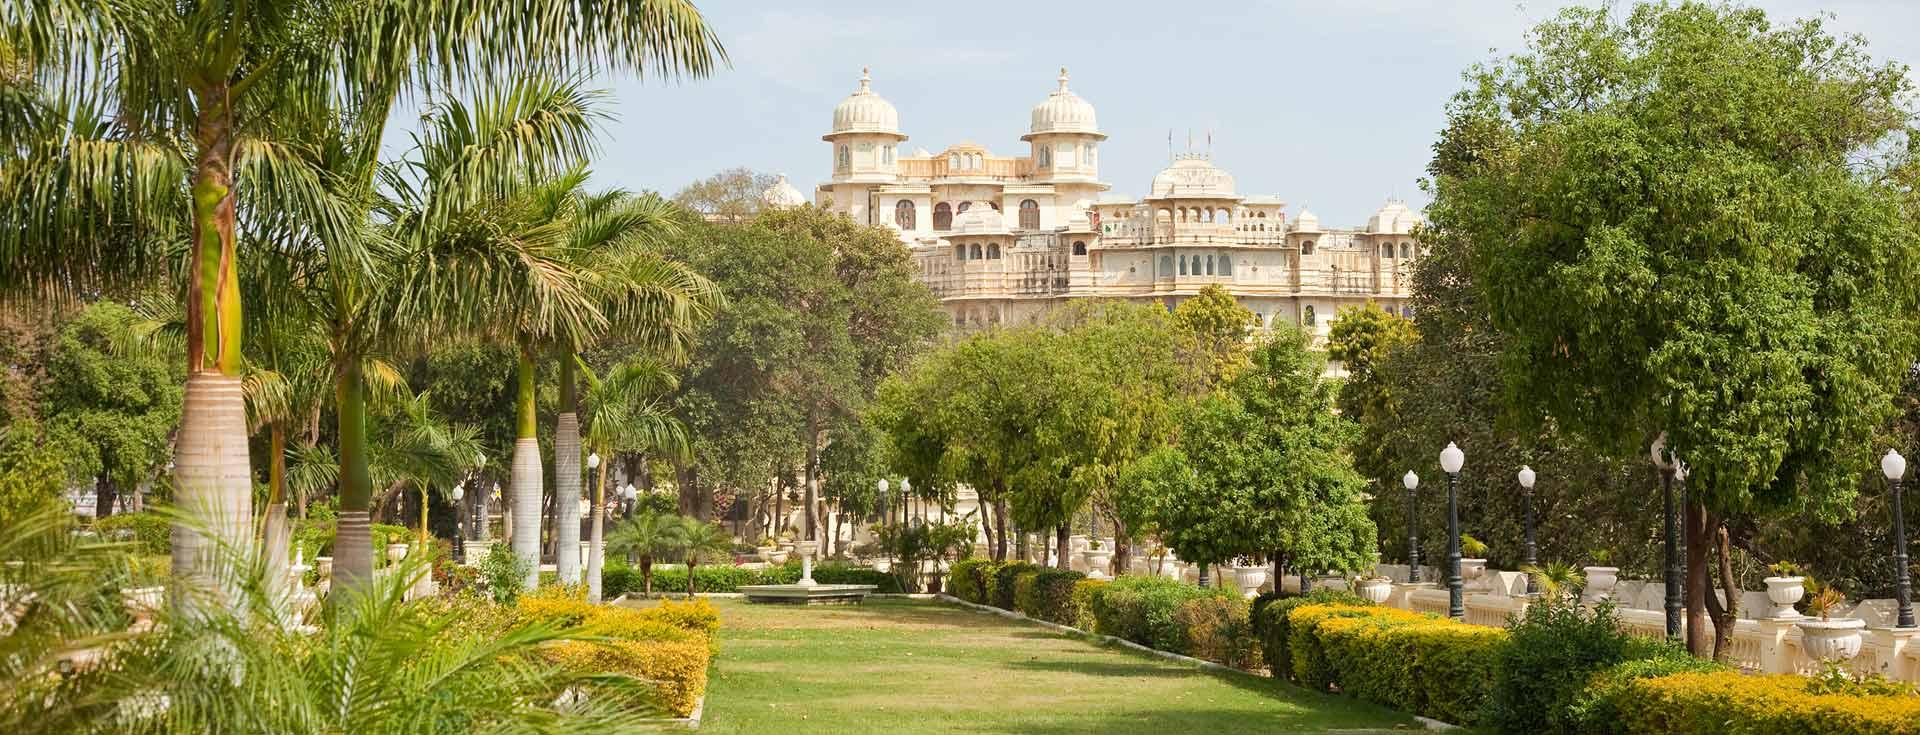 Explore Ram Niwas Garden in Jaipur